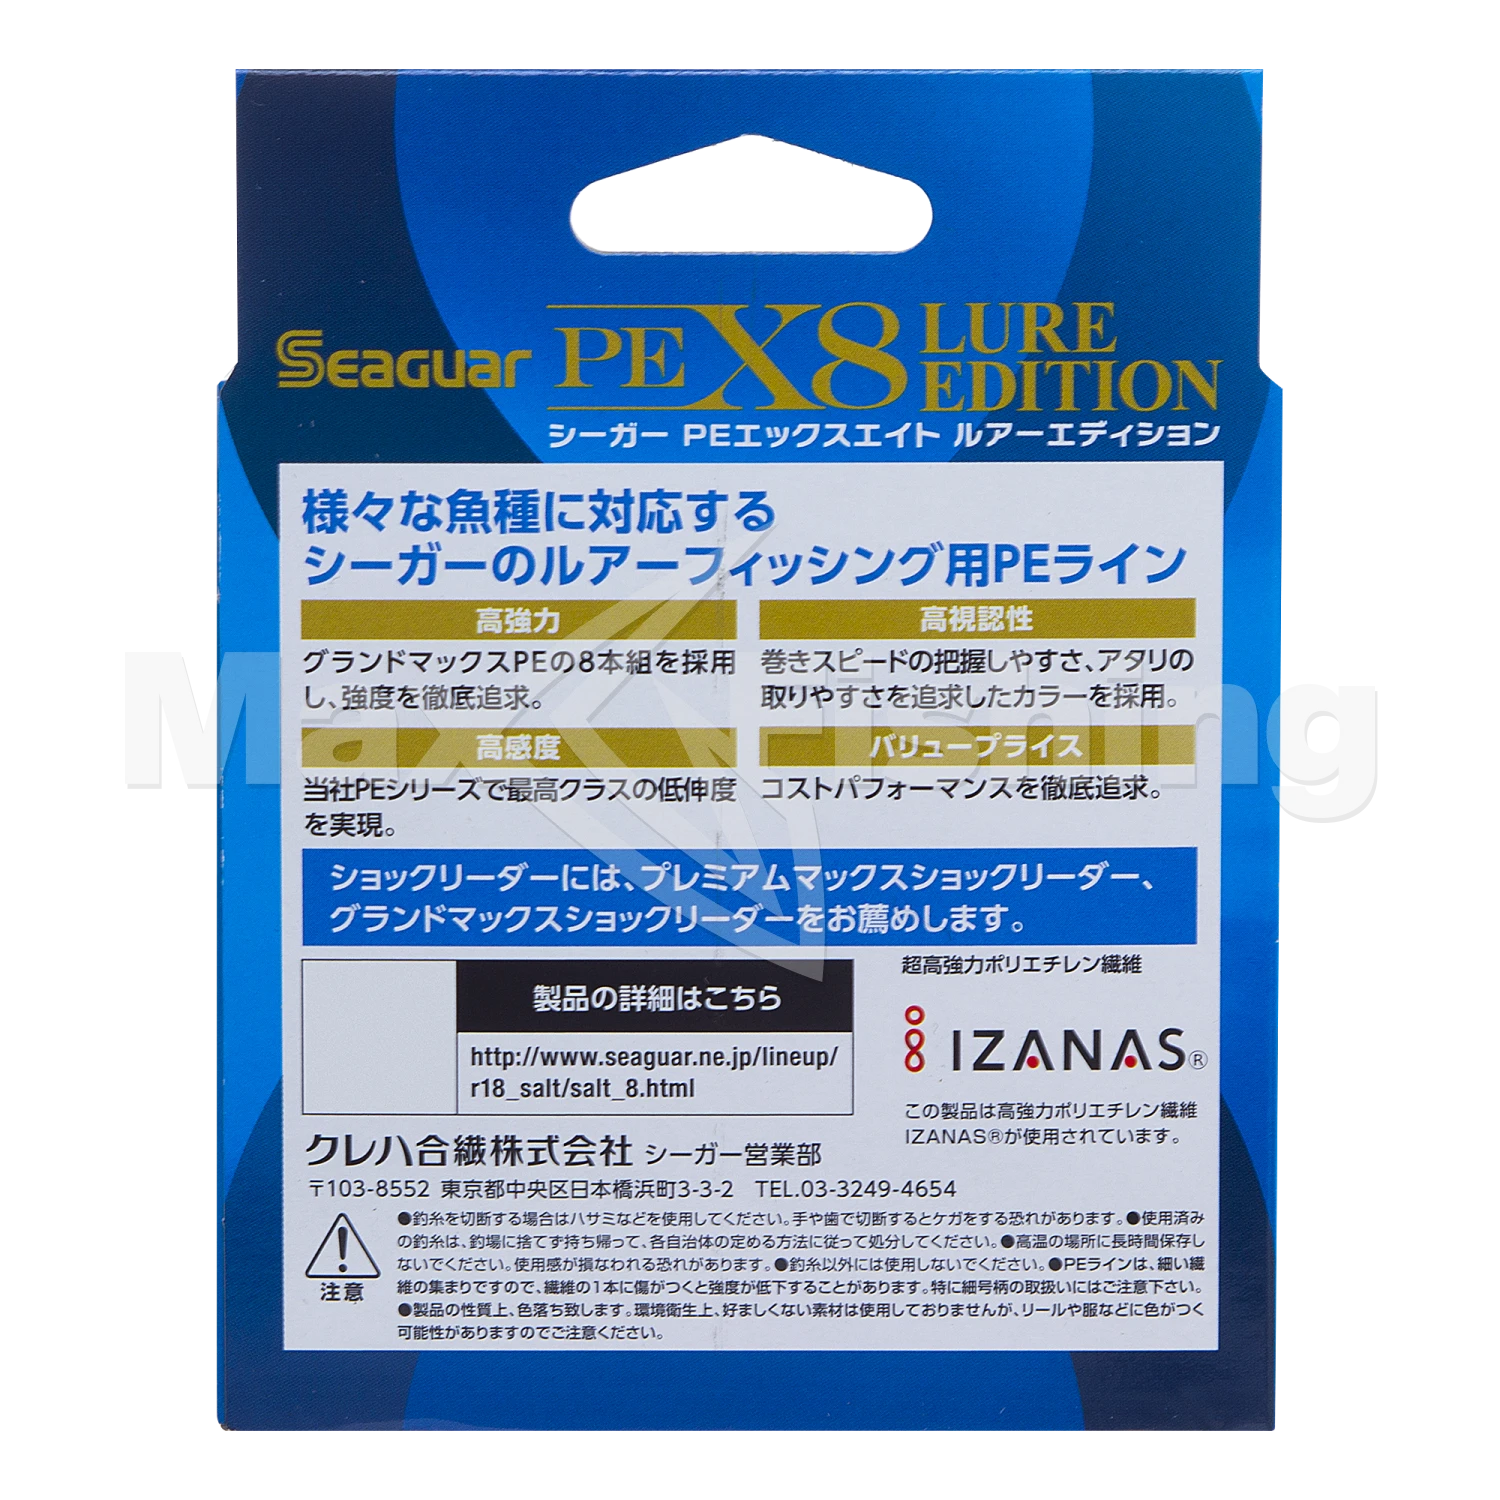 Шнур плетеный Seaguar PE X8 Lure Edition #0,8 0,148мм 150м (multicolor)